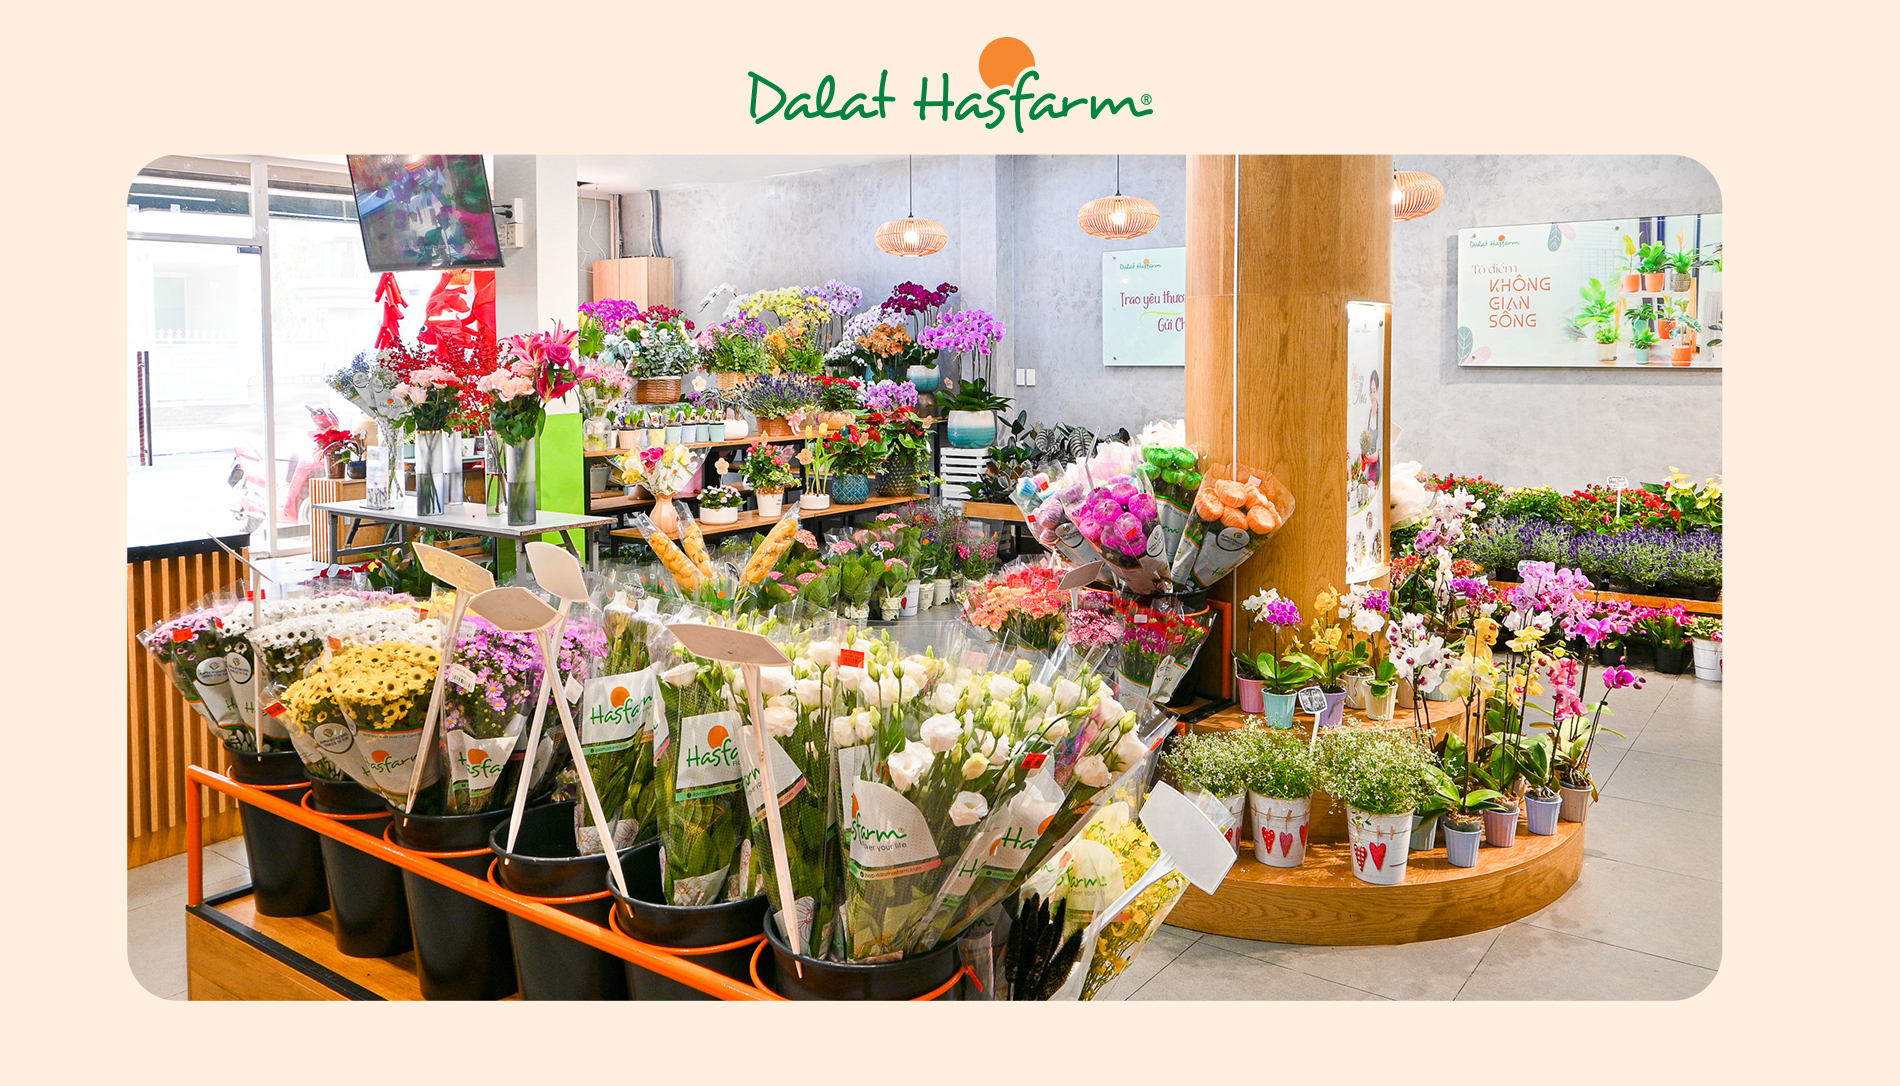 Shop hoa tươi Dalat Hasfarm Bình Thạnh